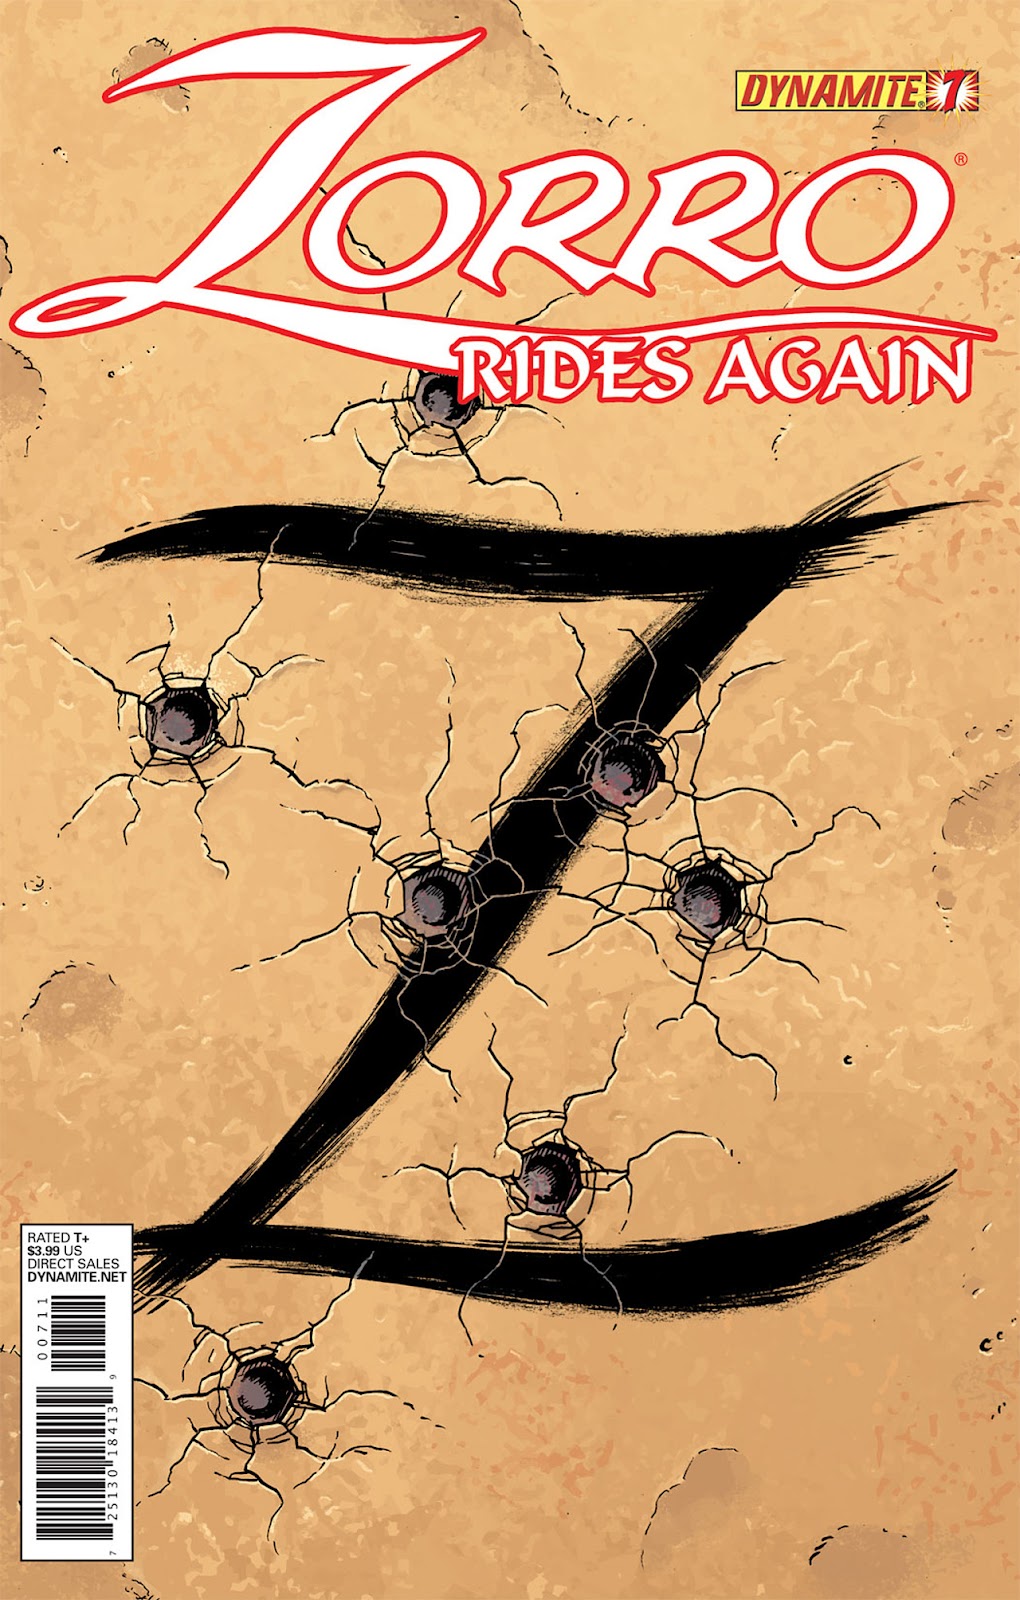 Zorro Rides Again issue 7 - Page 1